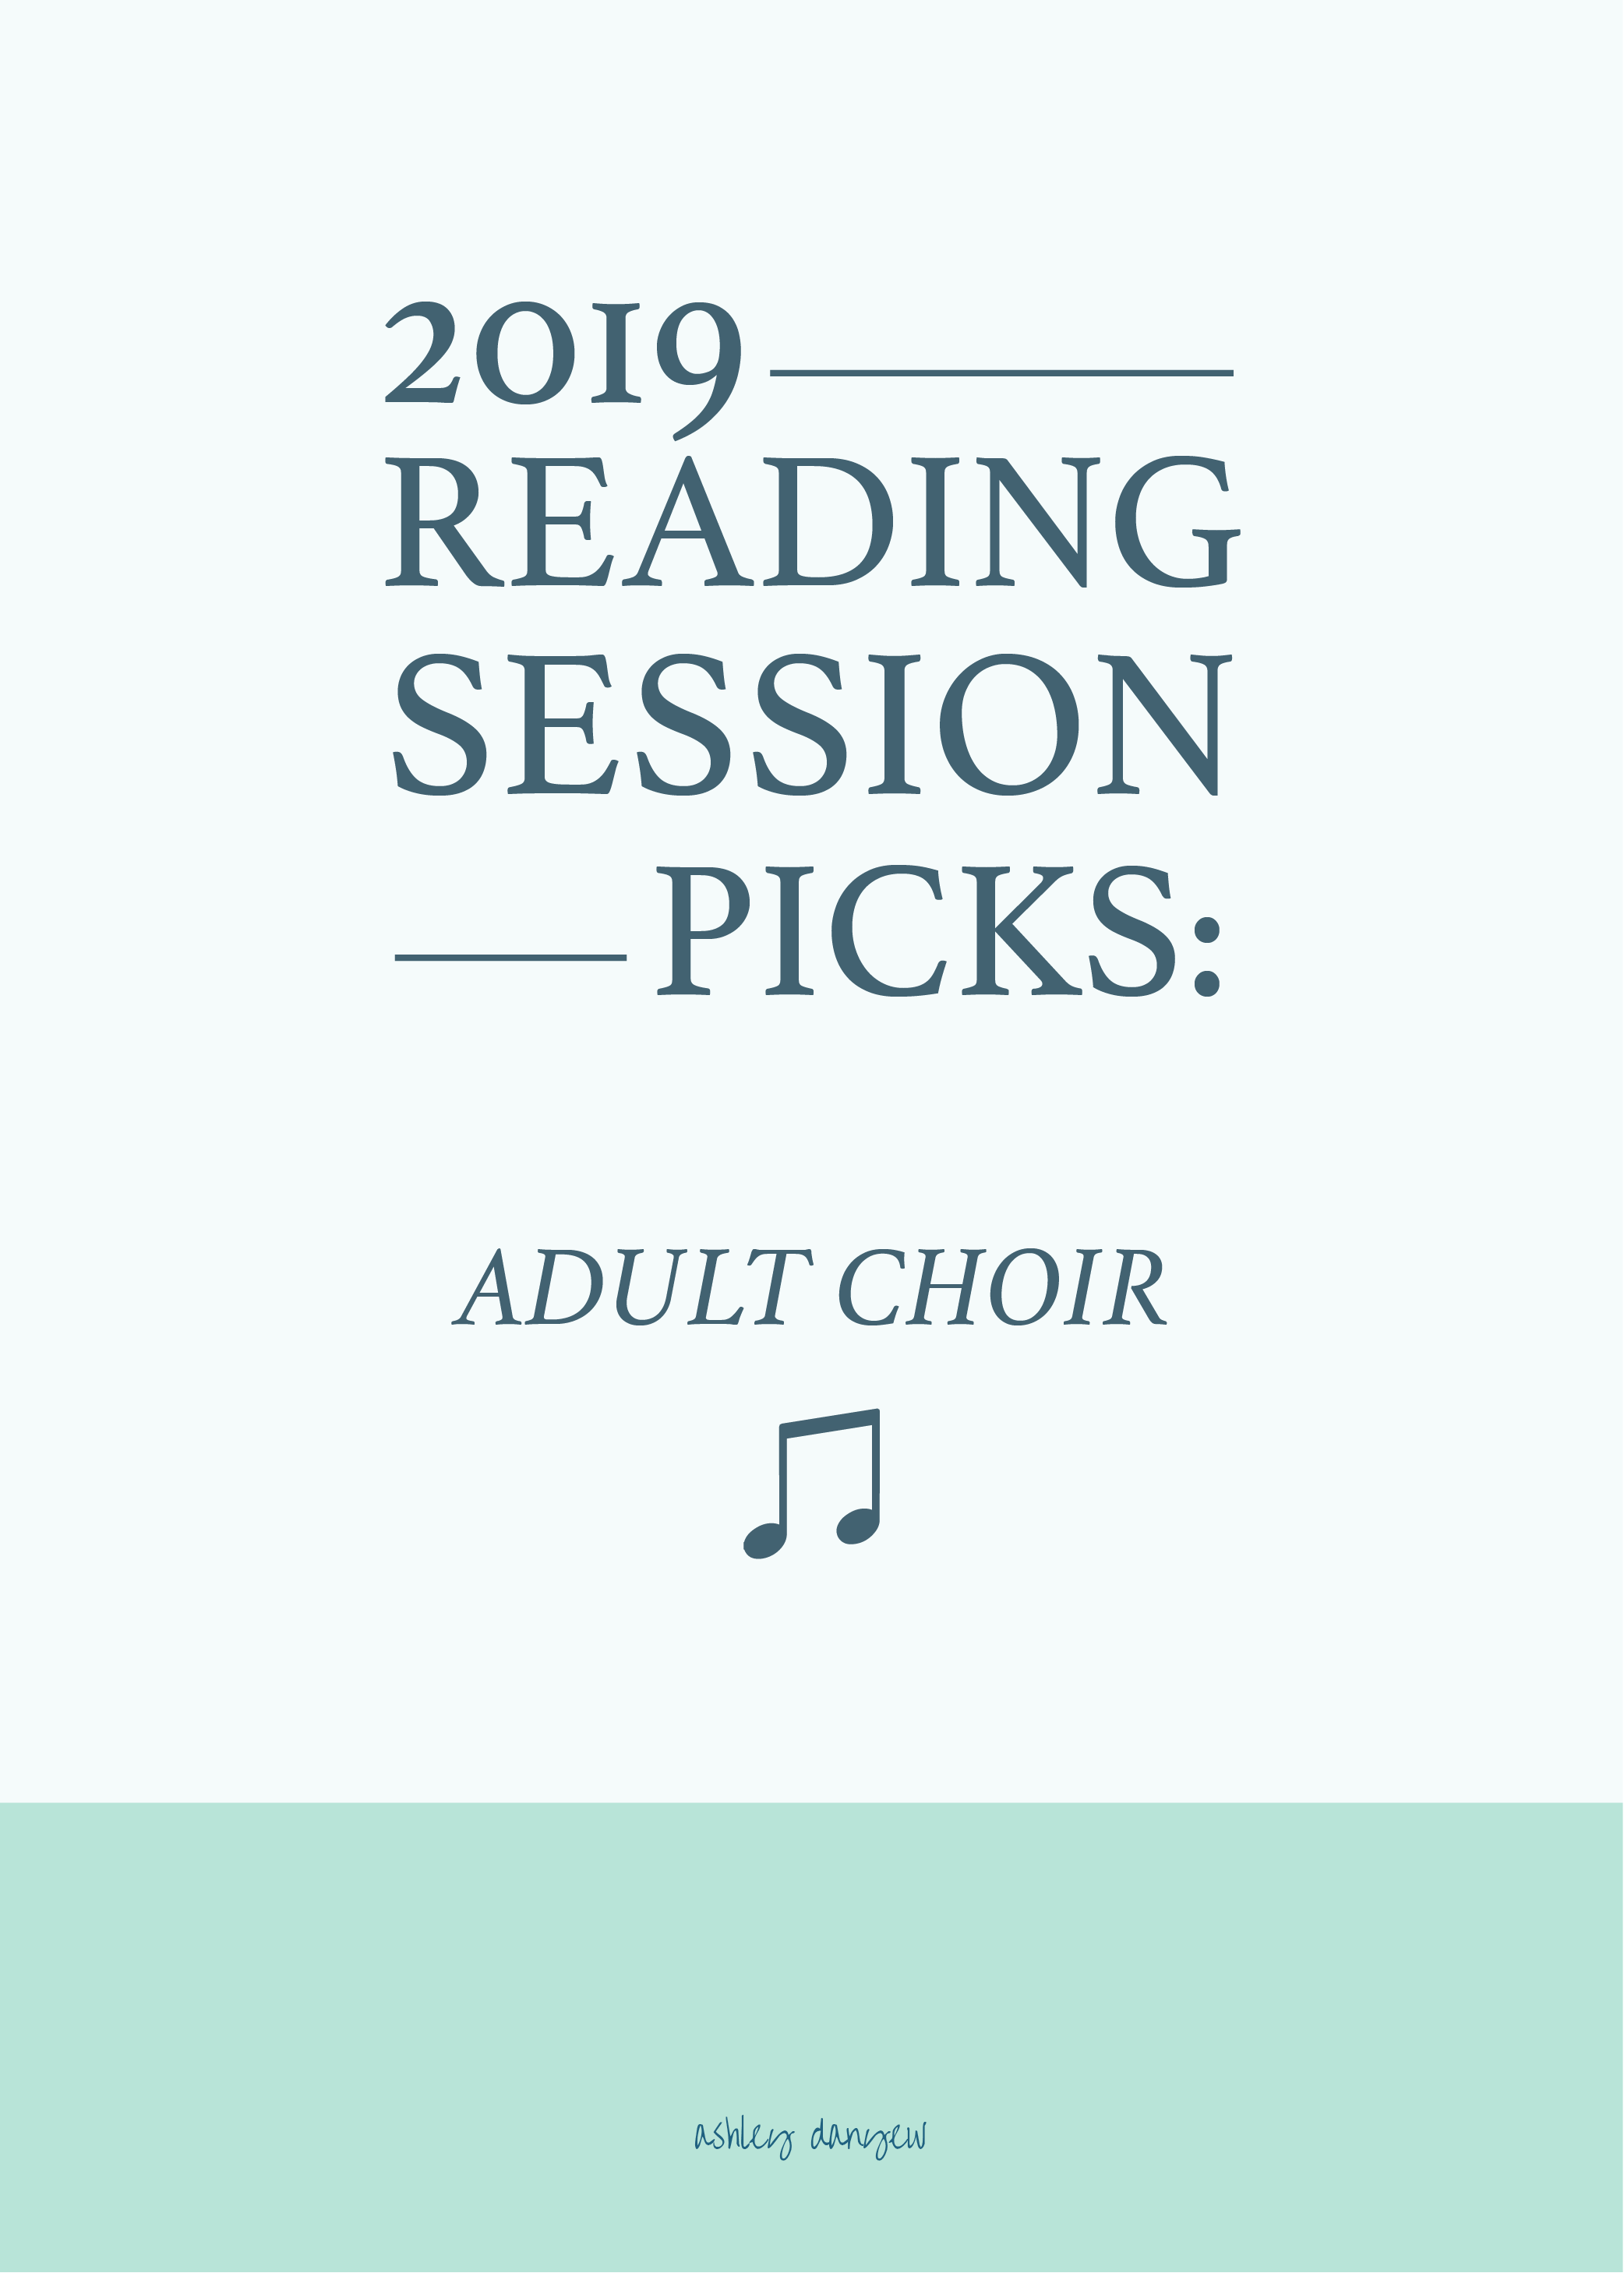 2019 Reading Session Picks: Adult Choir